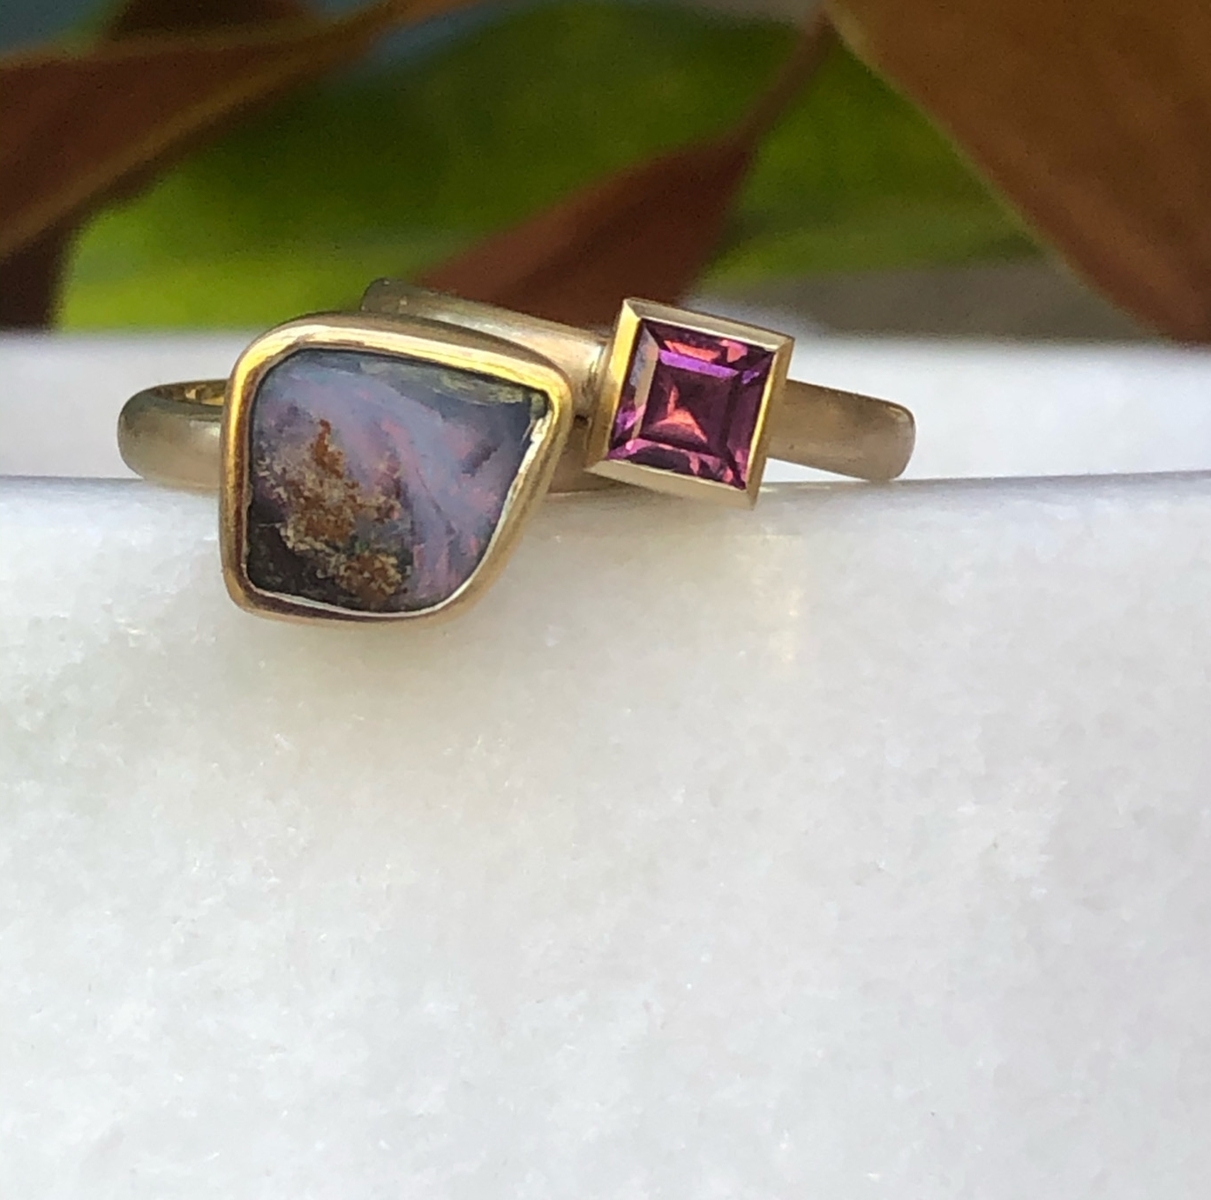 Solid boulder opal ring set with pinkish/purple boulder opal